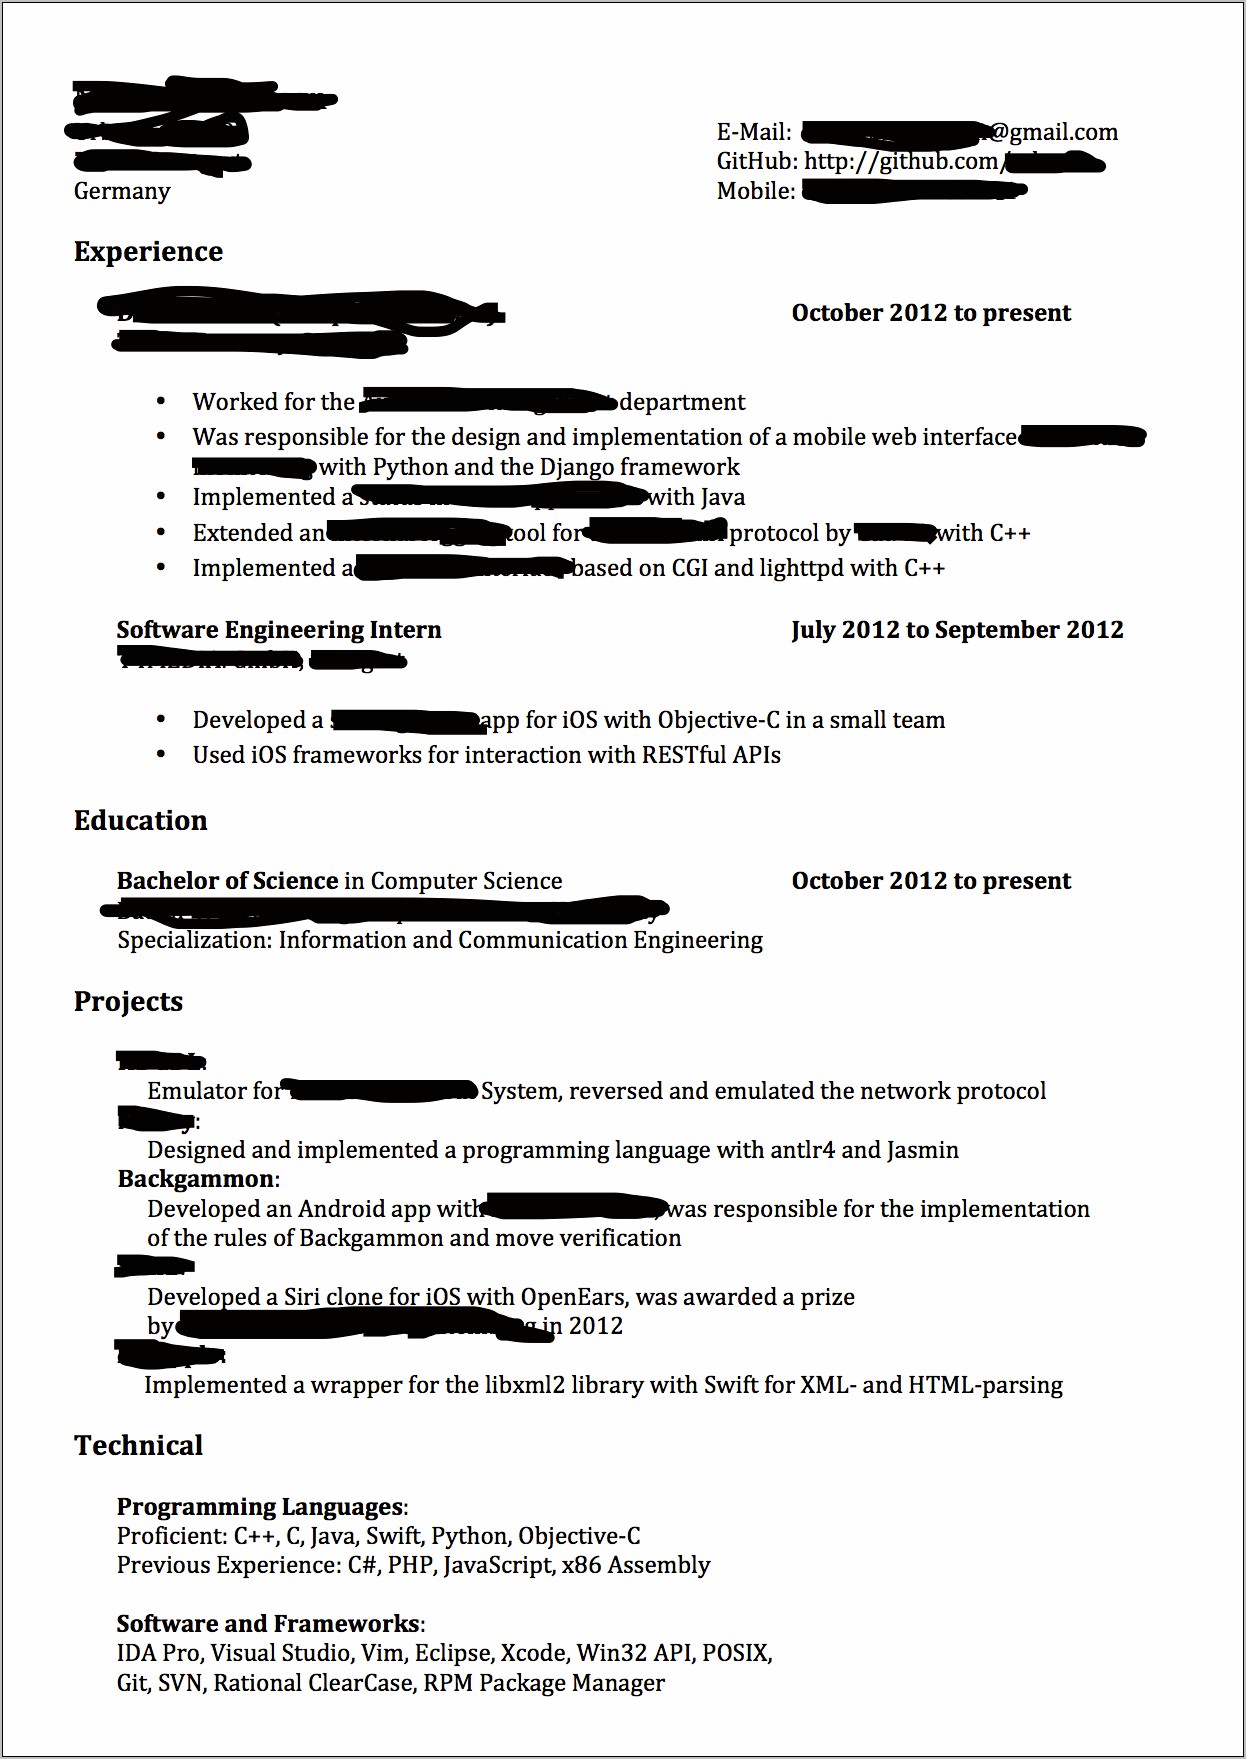 Resume Objective For Game Deveoper Reddit